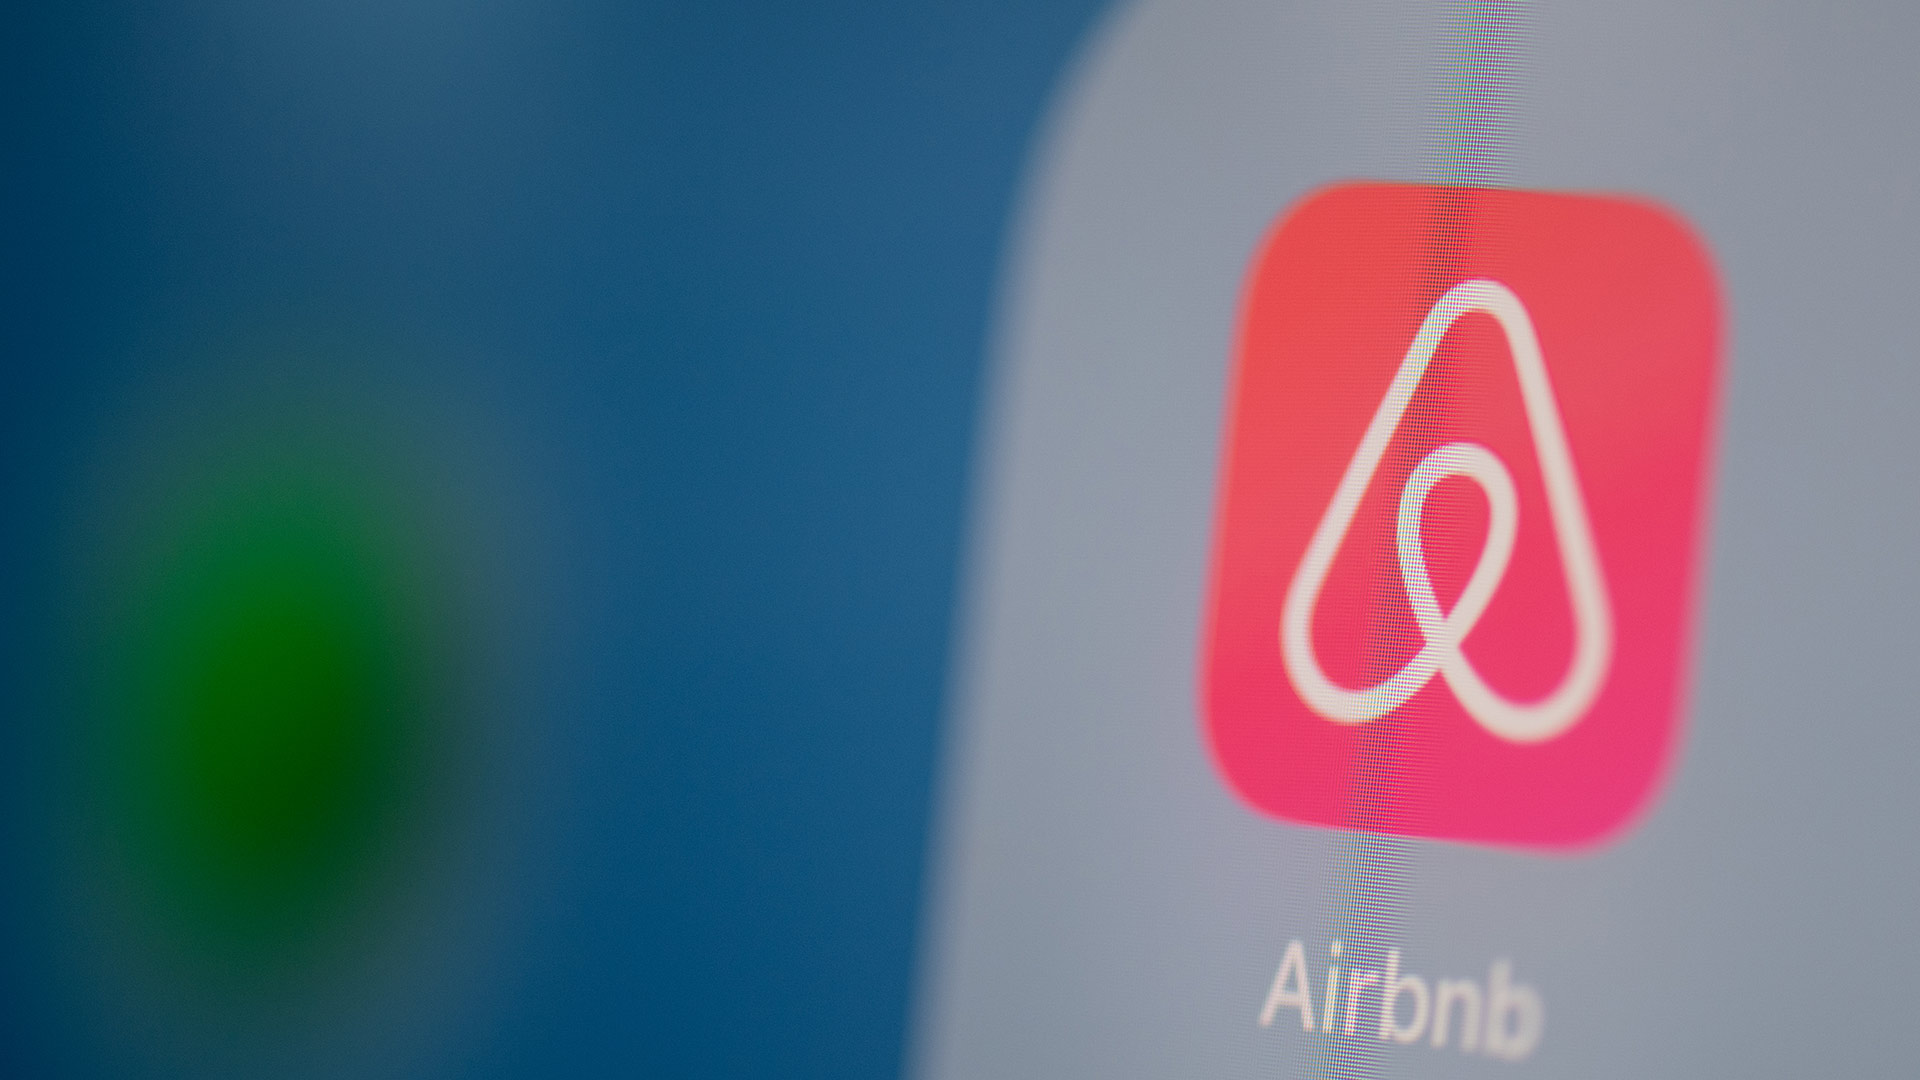 Airbnb quiere salir a bolsa en 2020